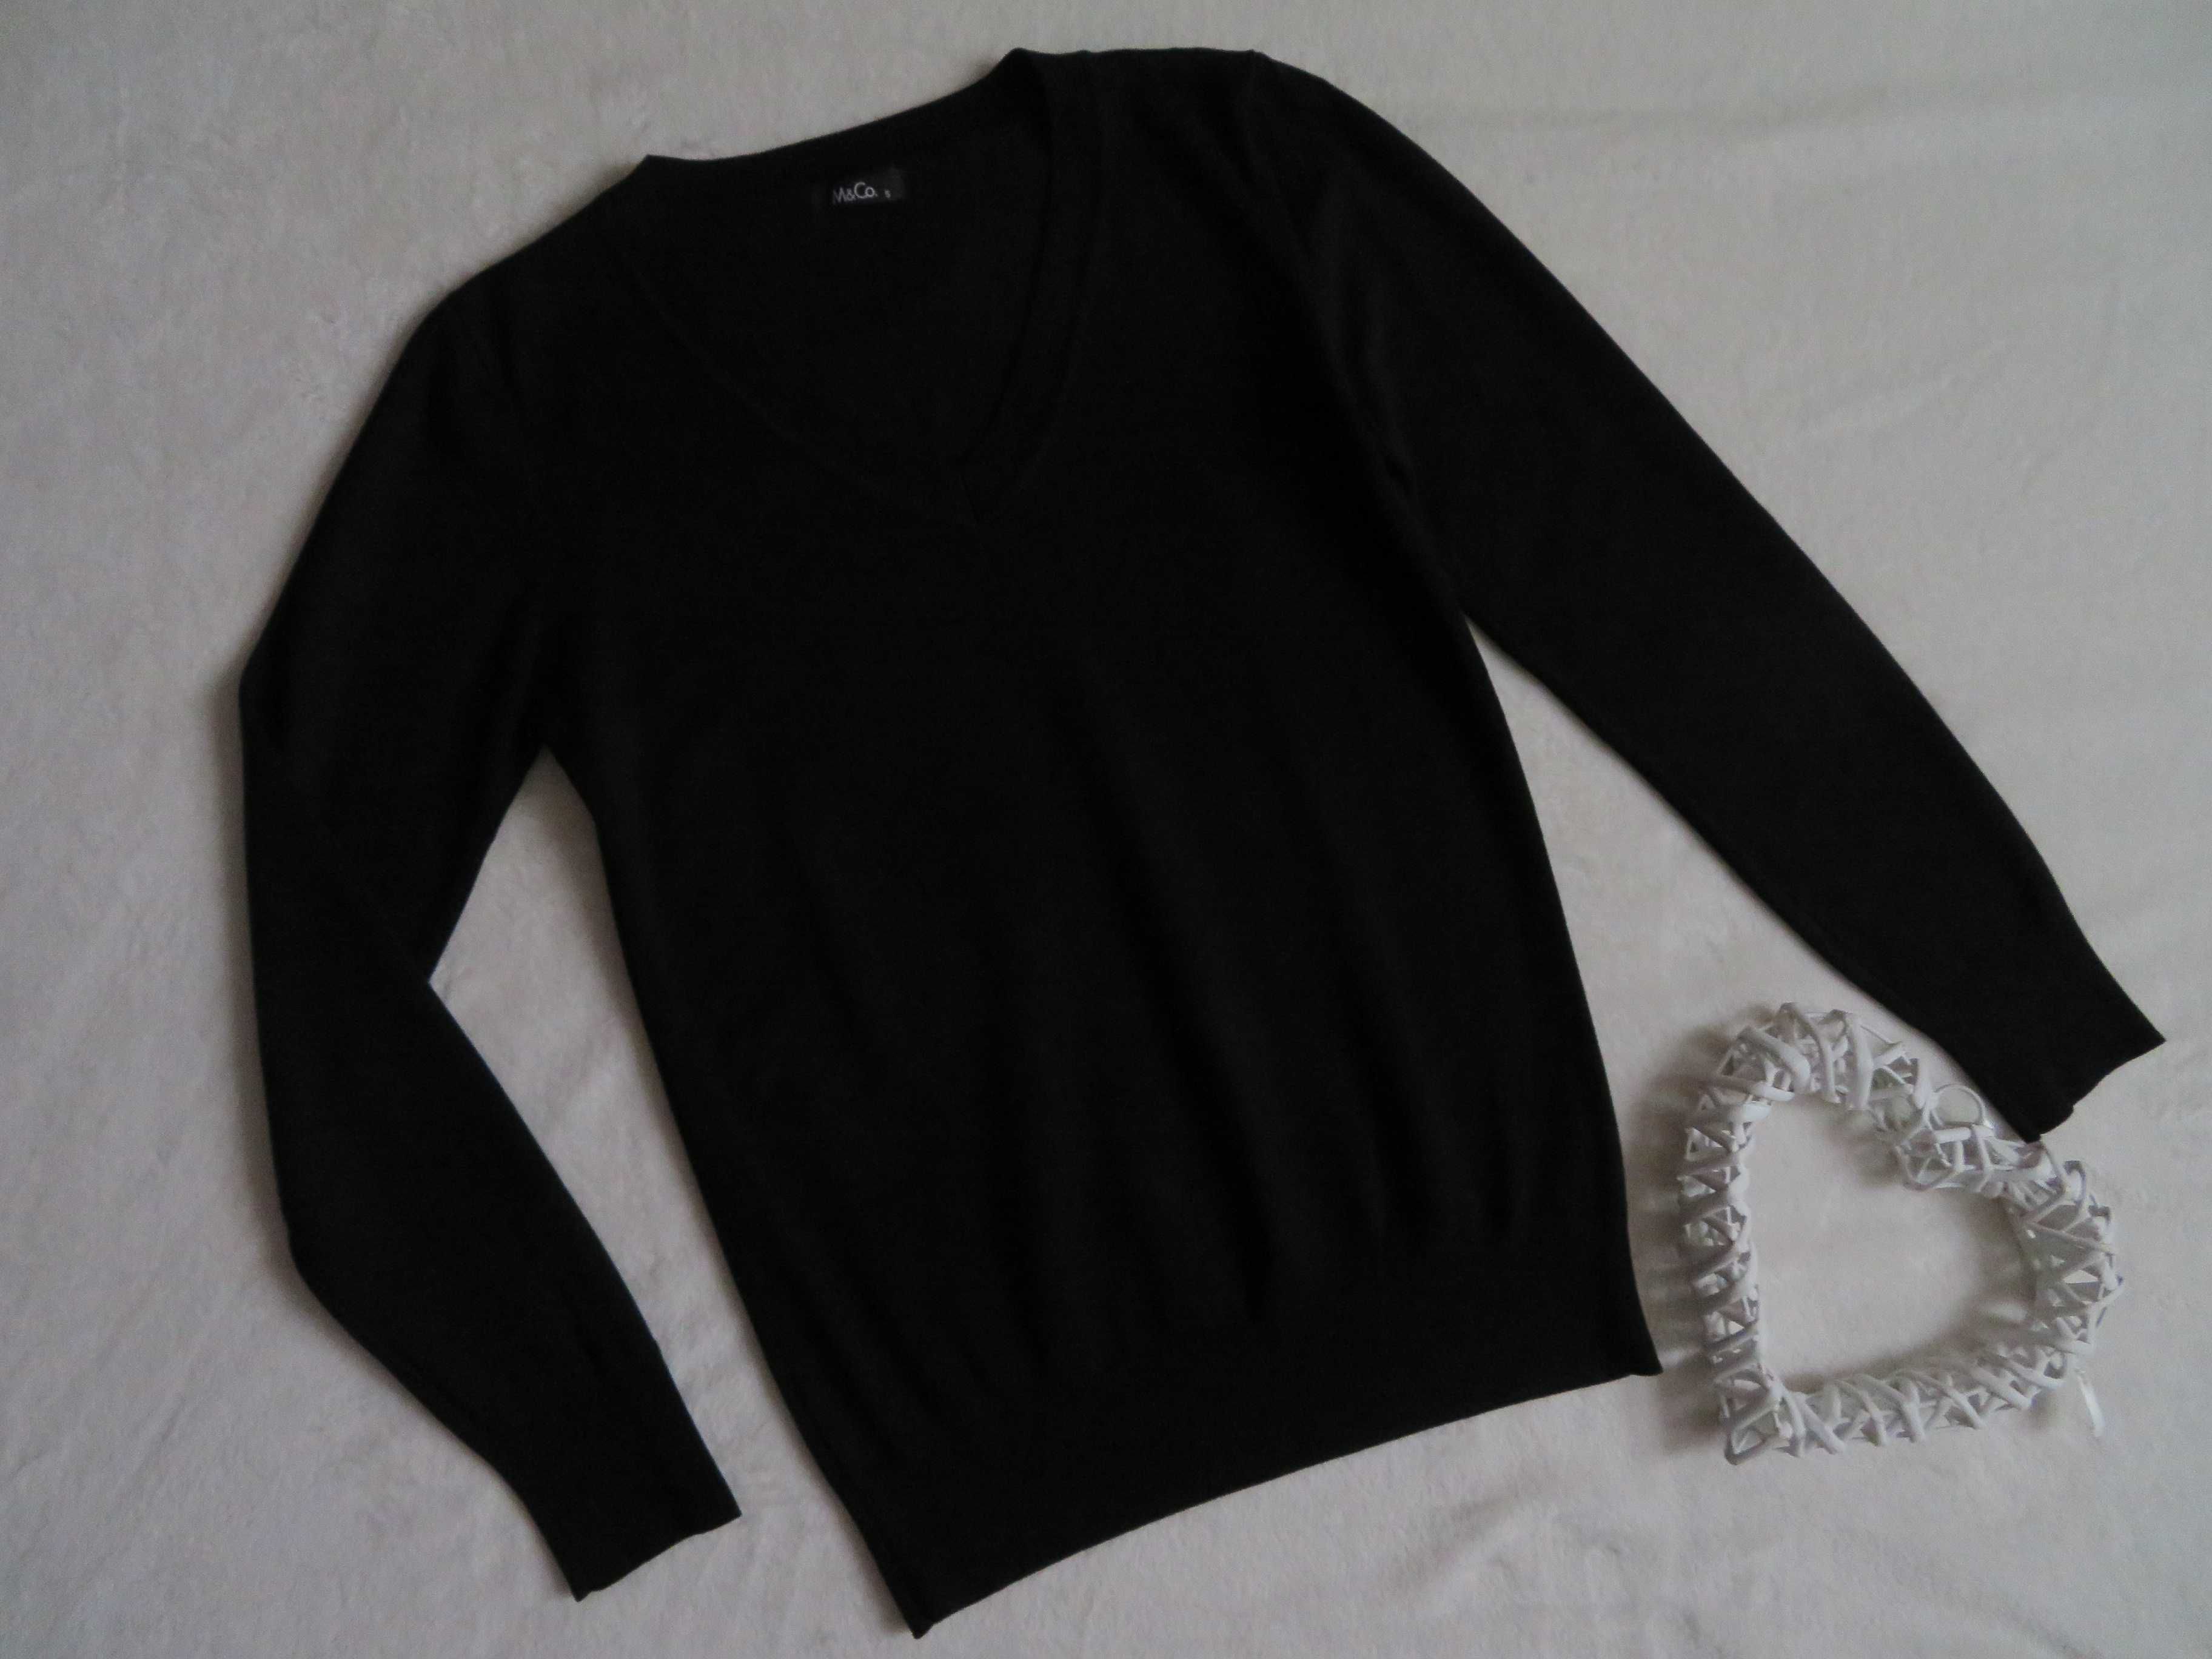 M&CO klasyczny sweter damski sweterek swetr czarny dekolt V,  BDB 36 S